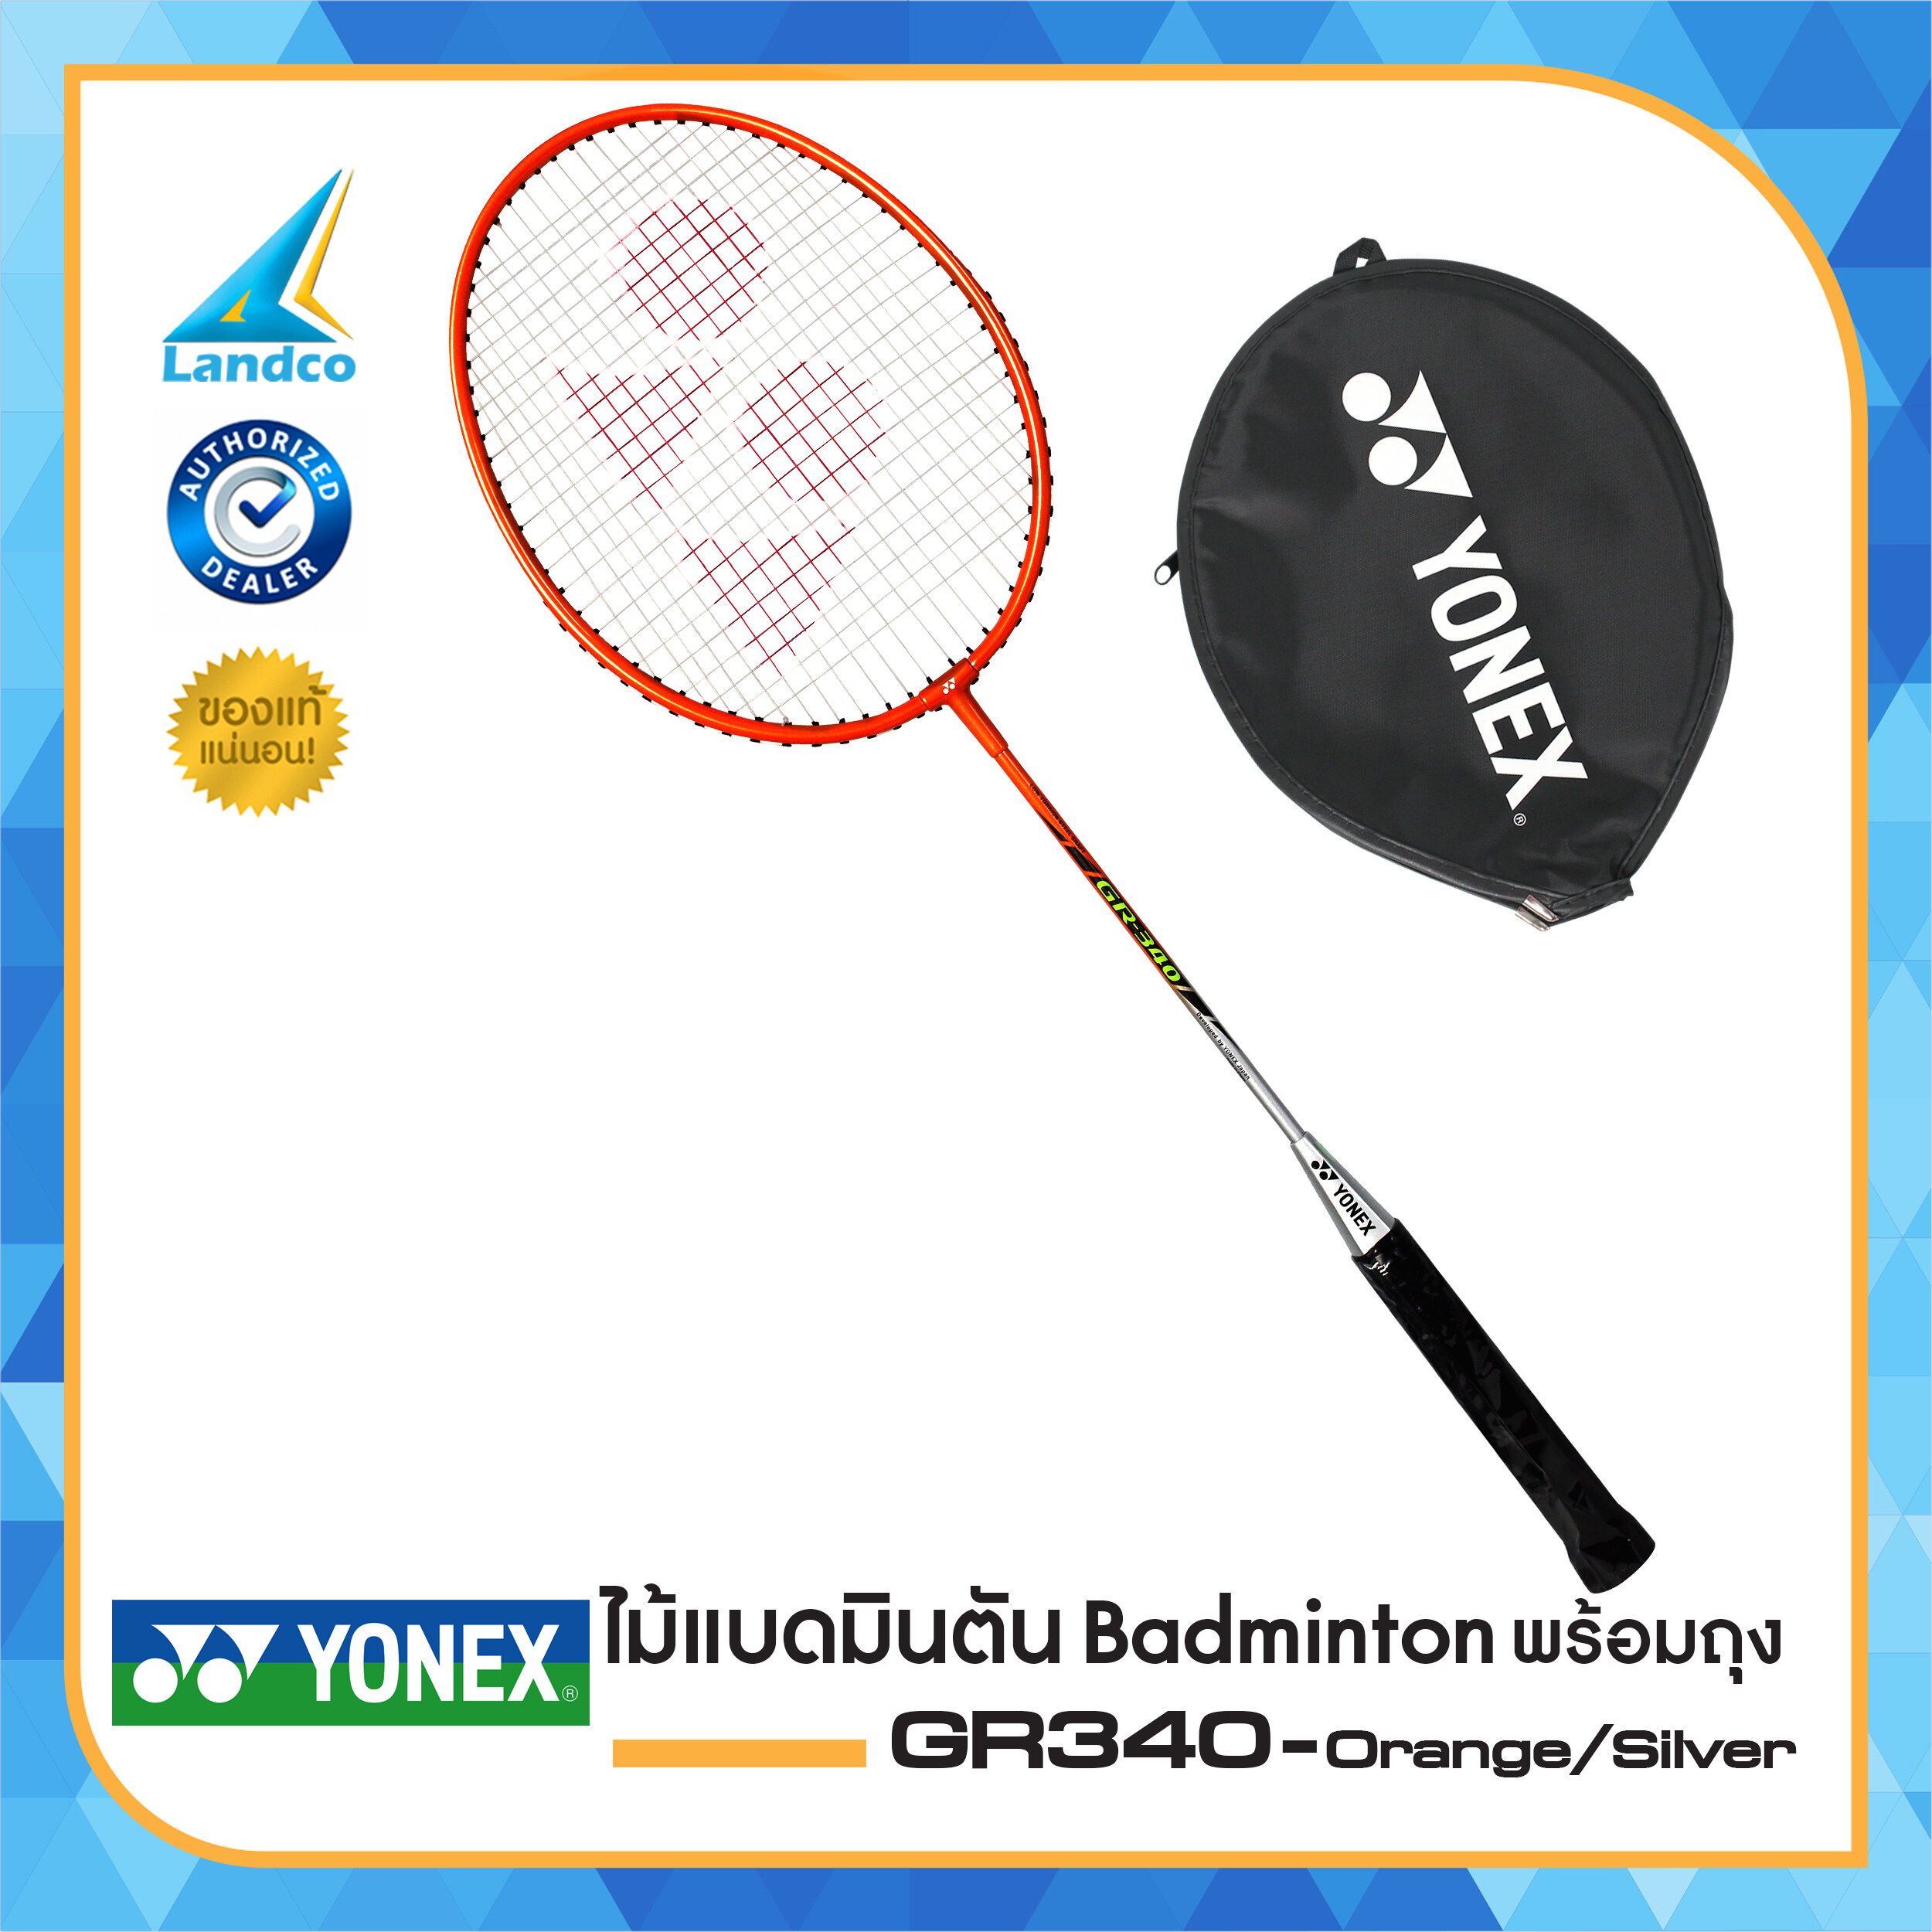 Yonex ไม้แบดมินตัน badminton พร้อมถุง รุ่น GR340 - Orange/Silver